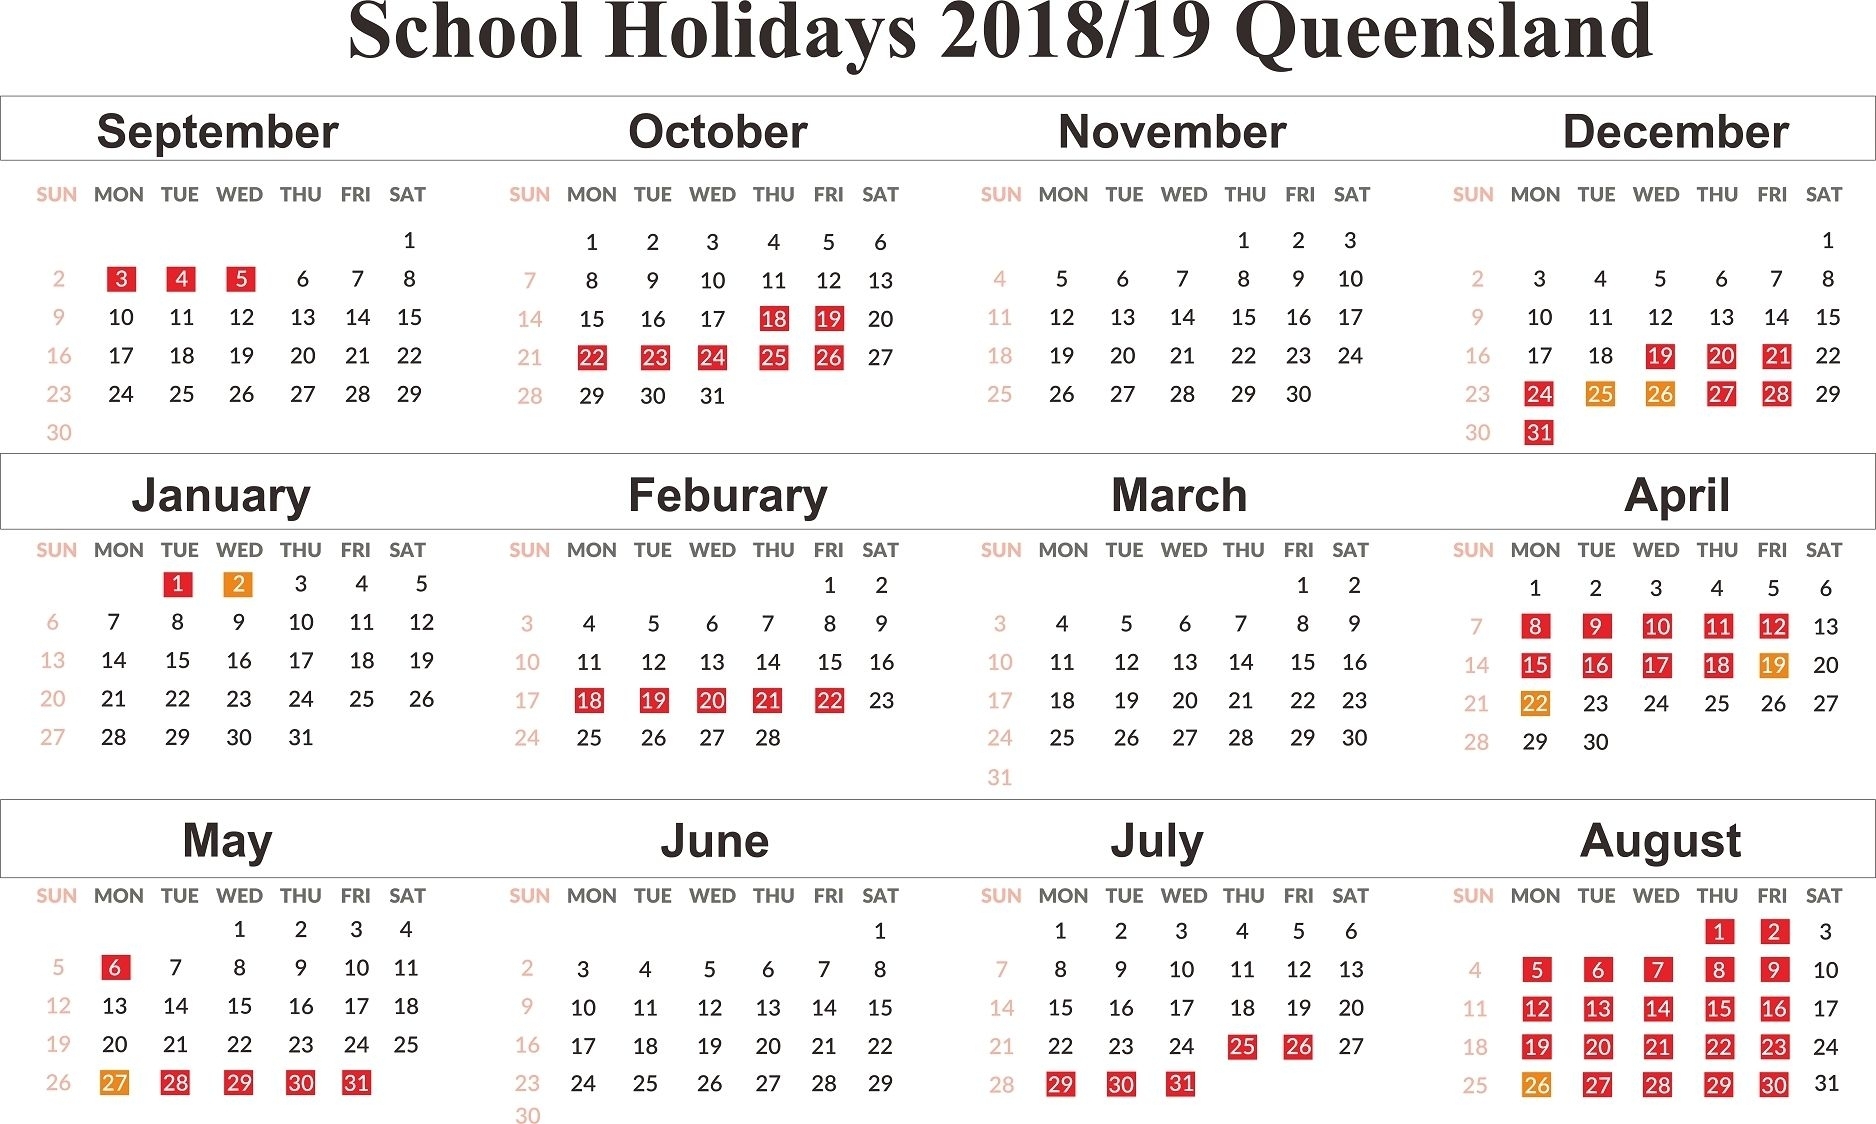 Printable Qld School Holiday Calendar 2021 | Calendar